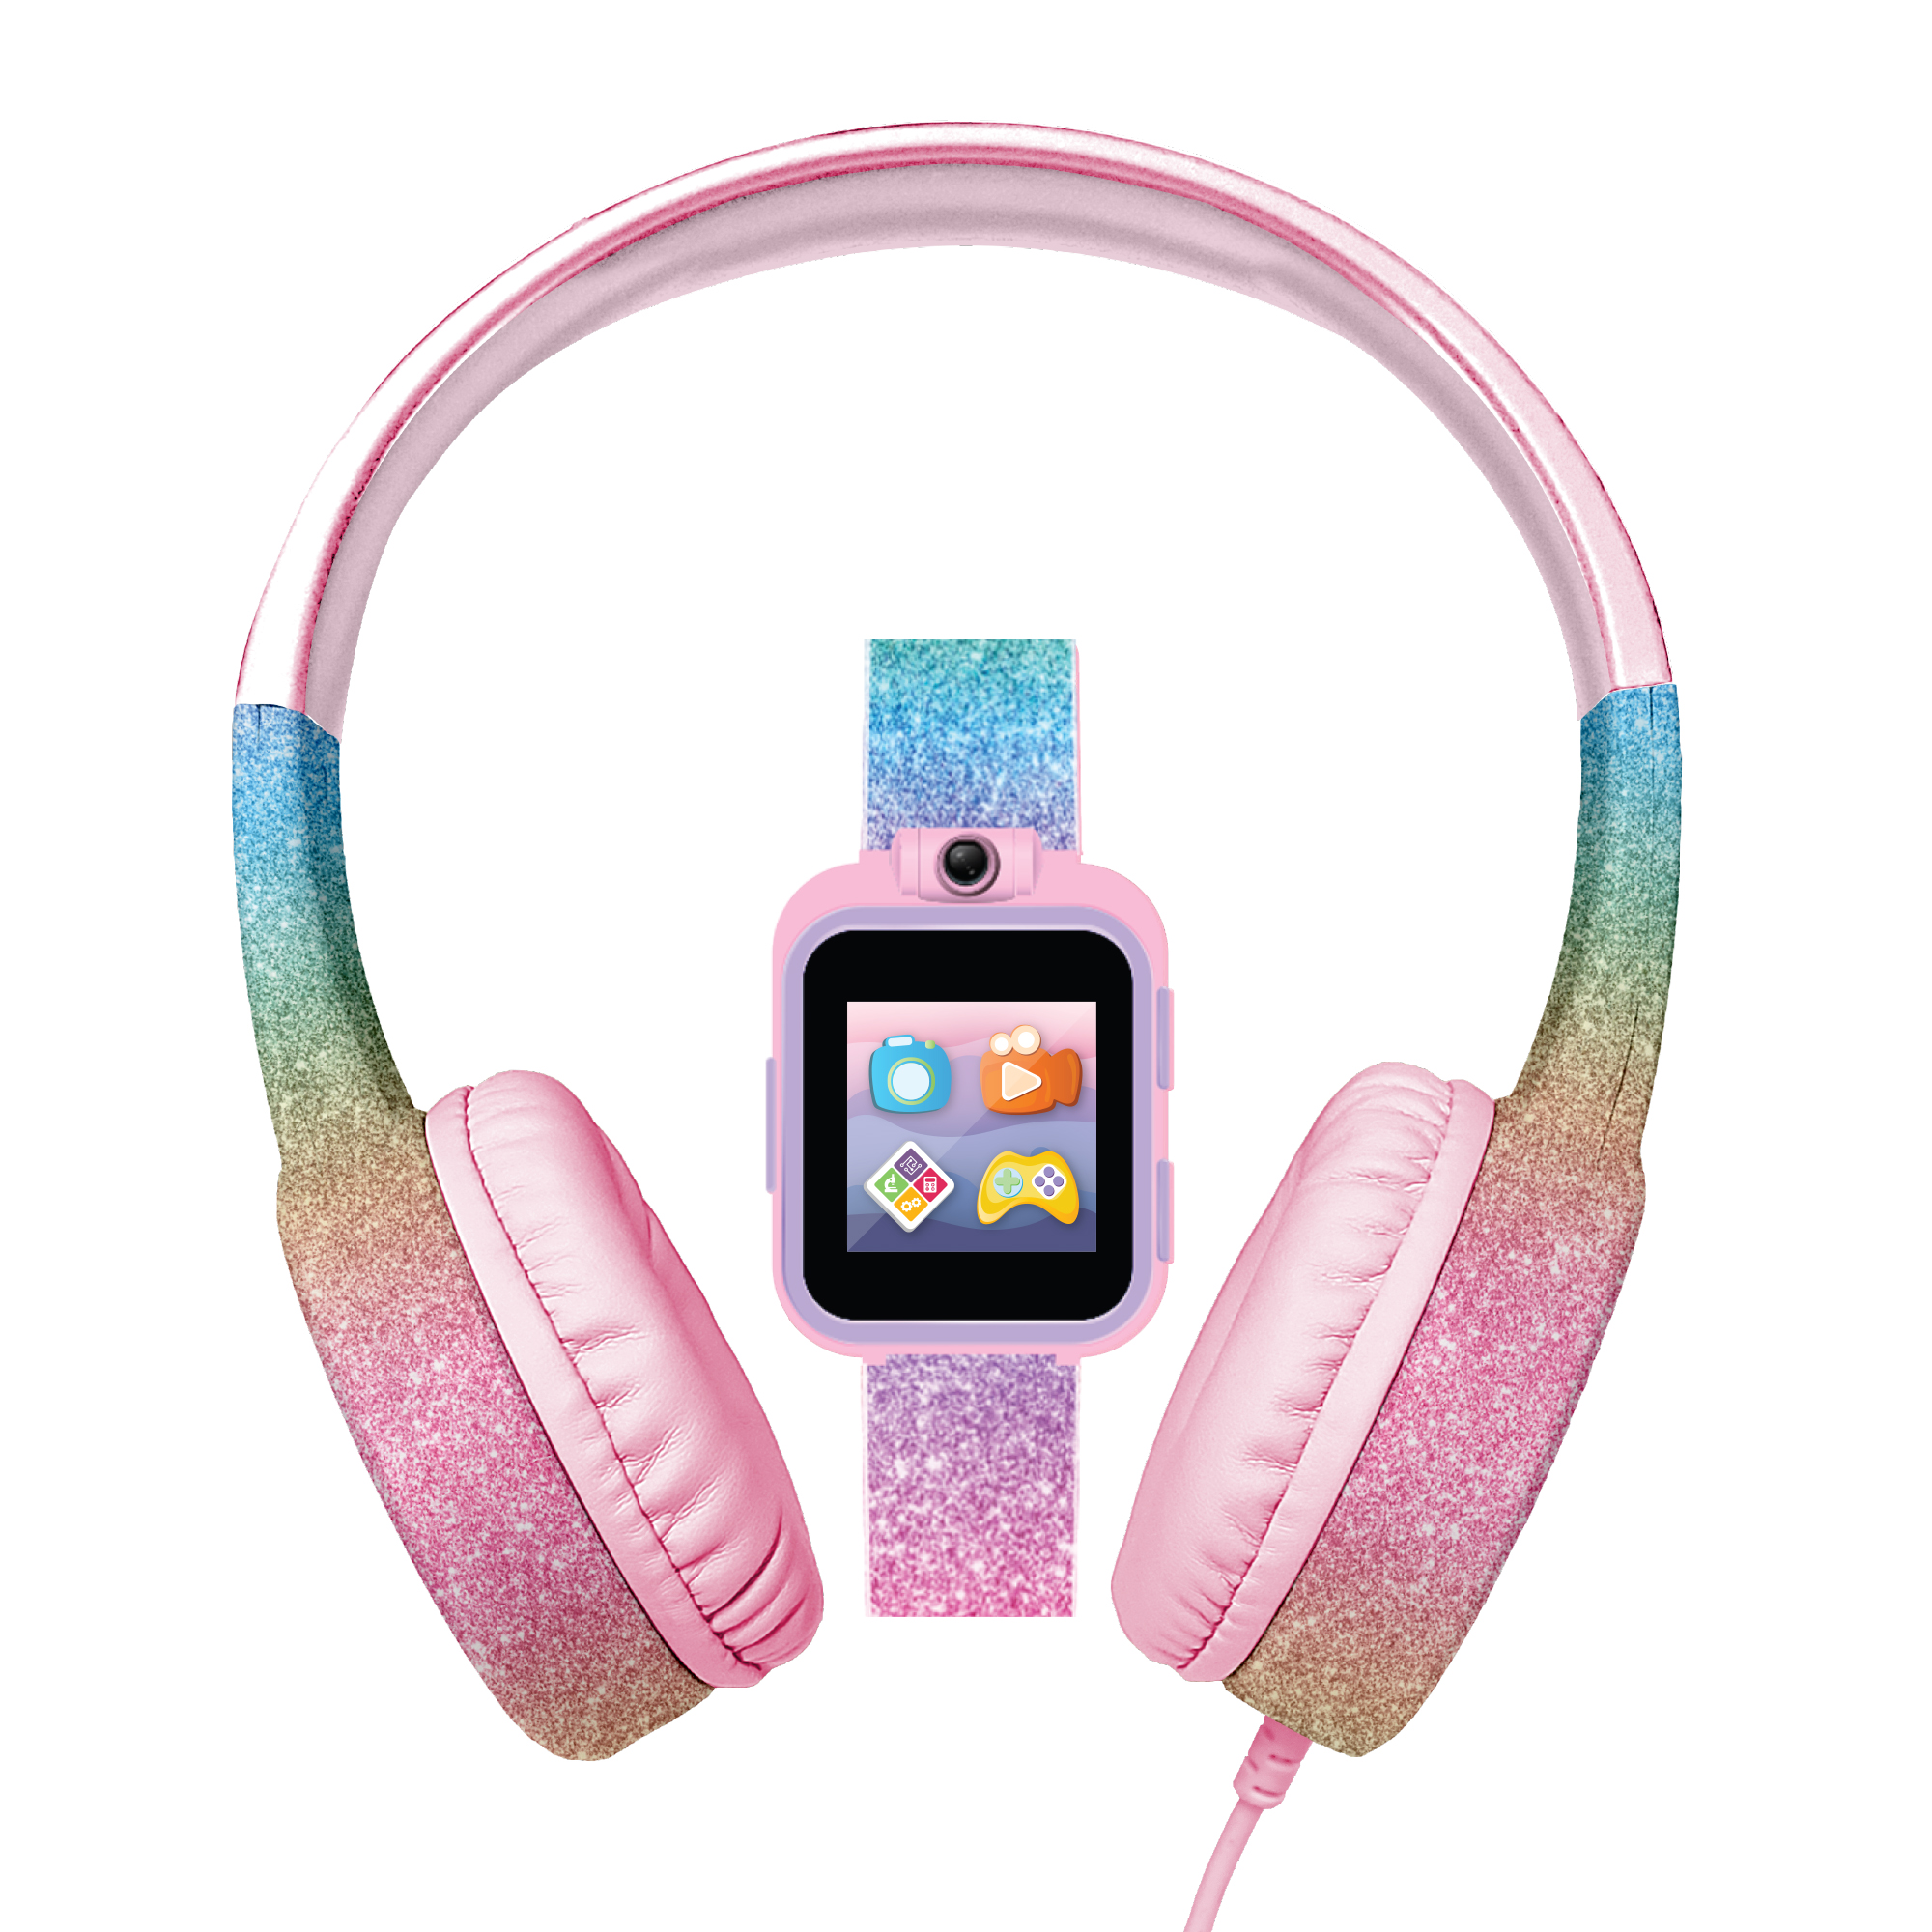 iTech Girls Headphones & Smartwatch Set - Various colors $18.99